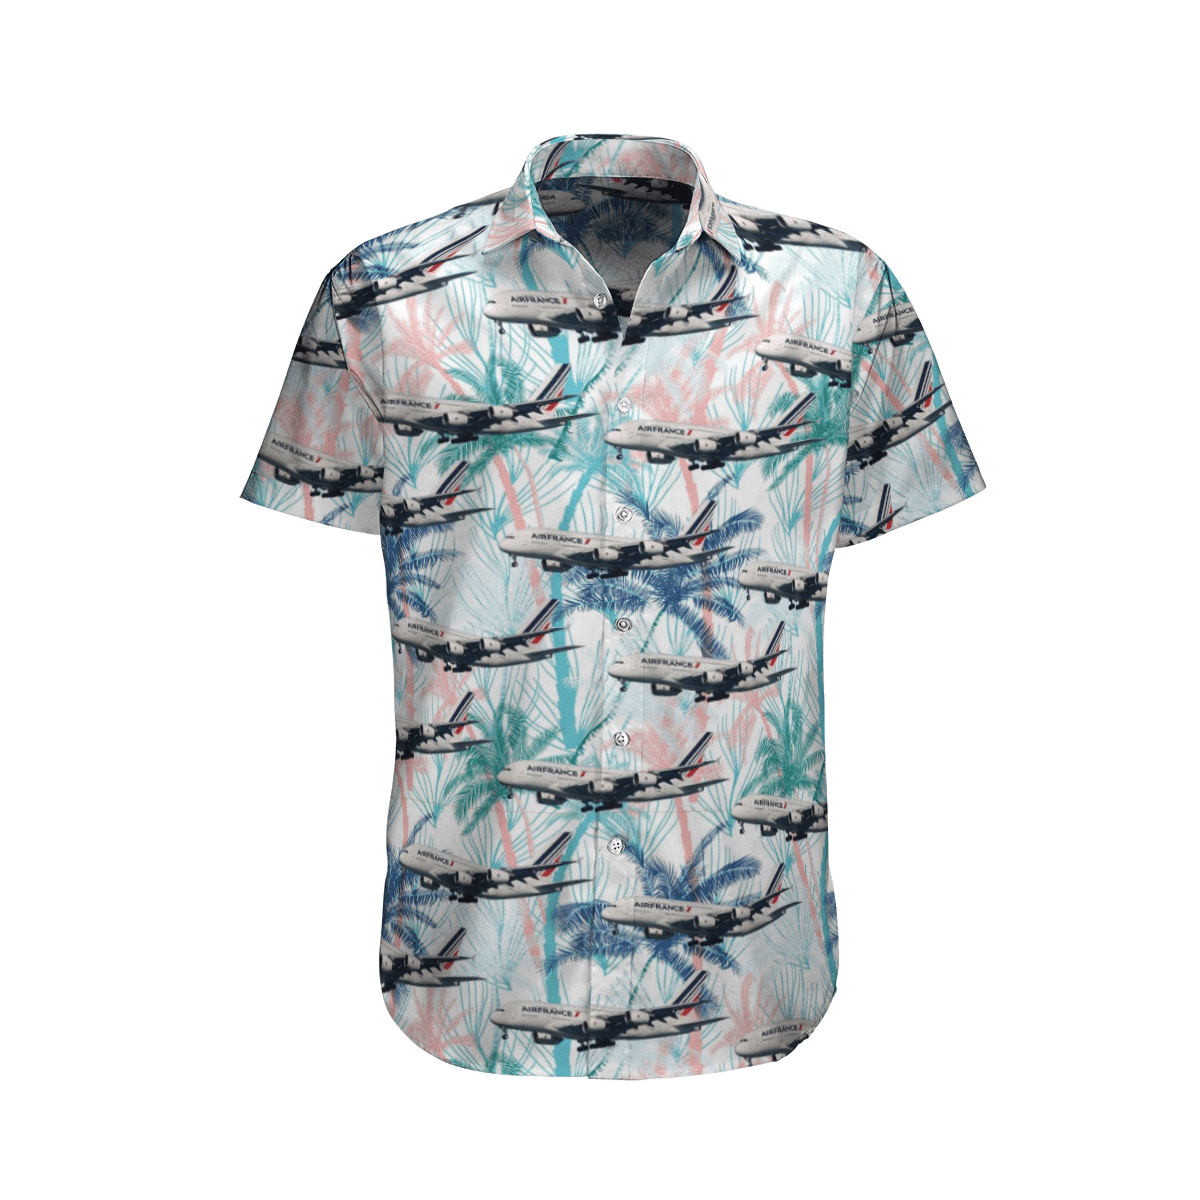 Get a new Hawaiian shirt to enjoy summer vacation 103